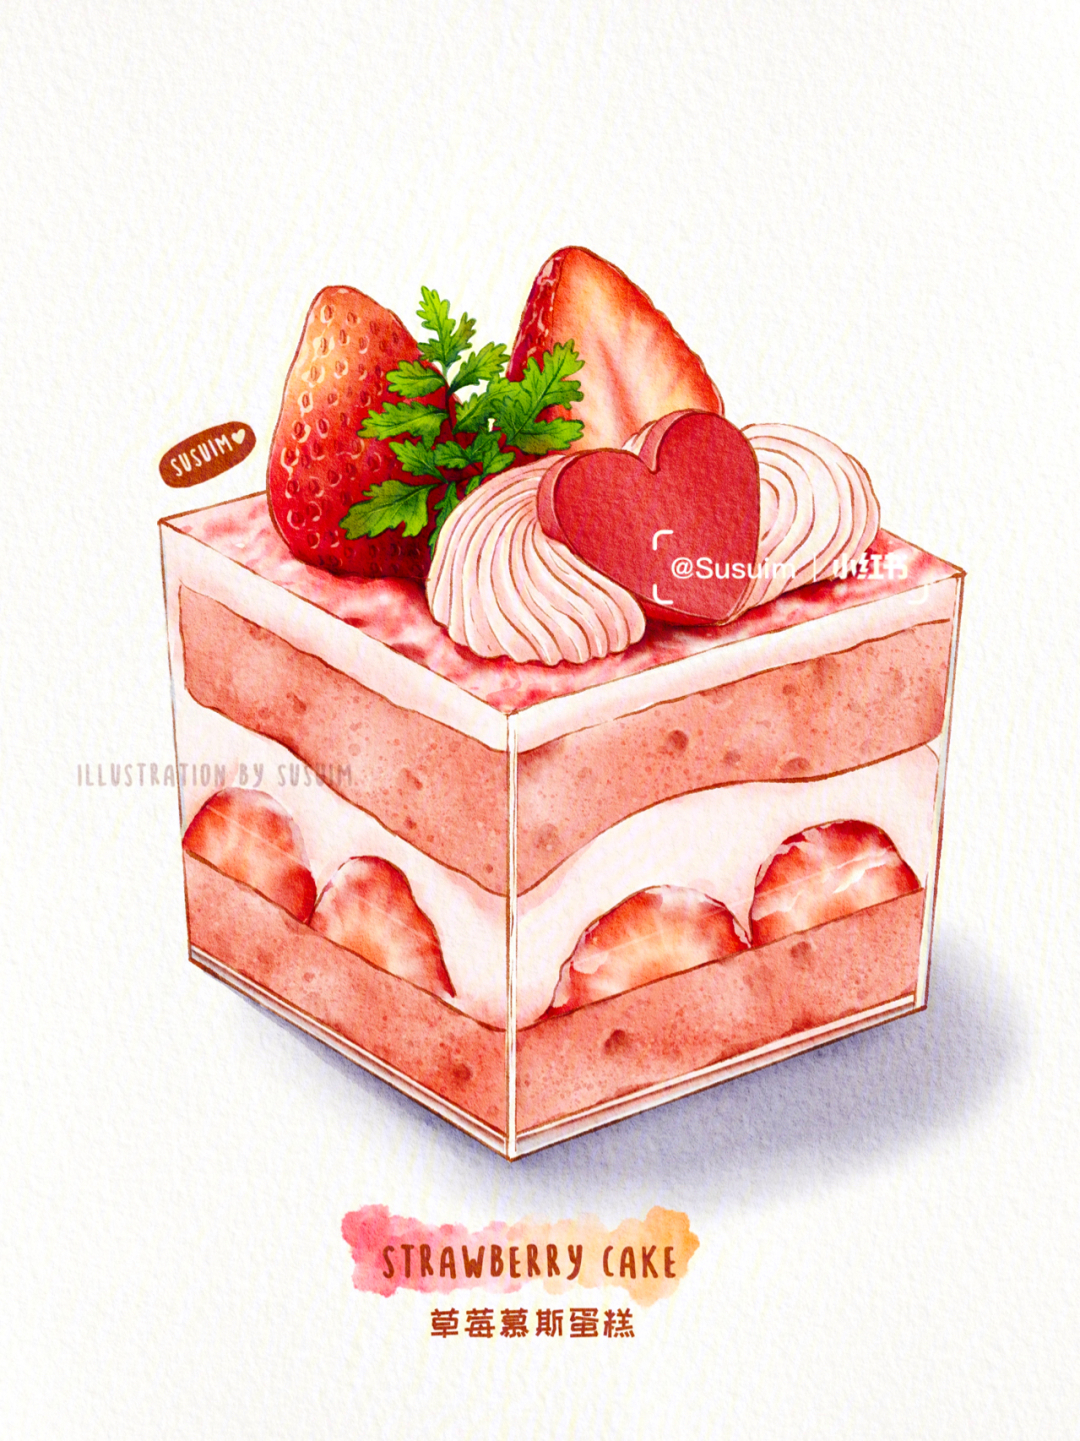 procreate水彩ipad美食草莓慕斯蛋糕写生